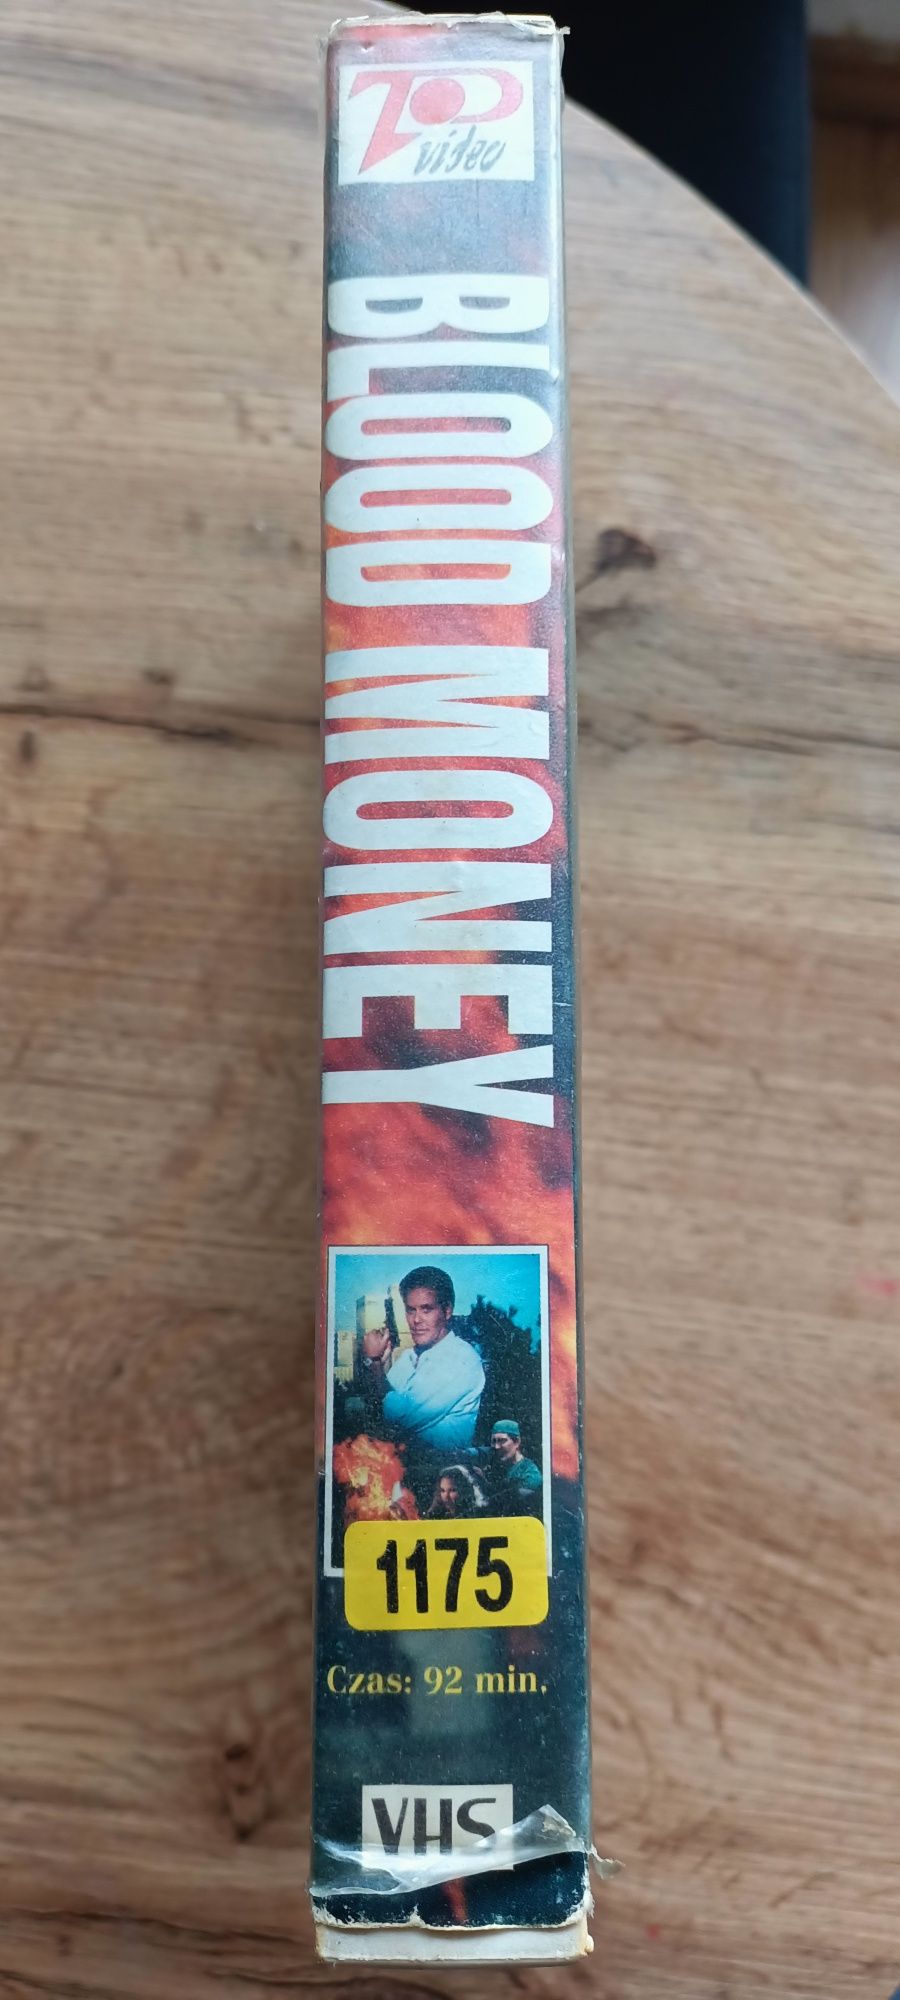 Kaseta VHS z filmem "Blood money" 1990 r.